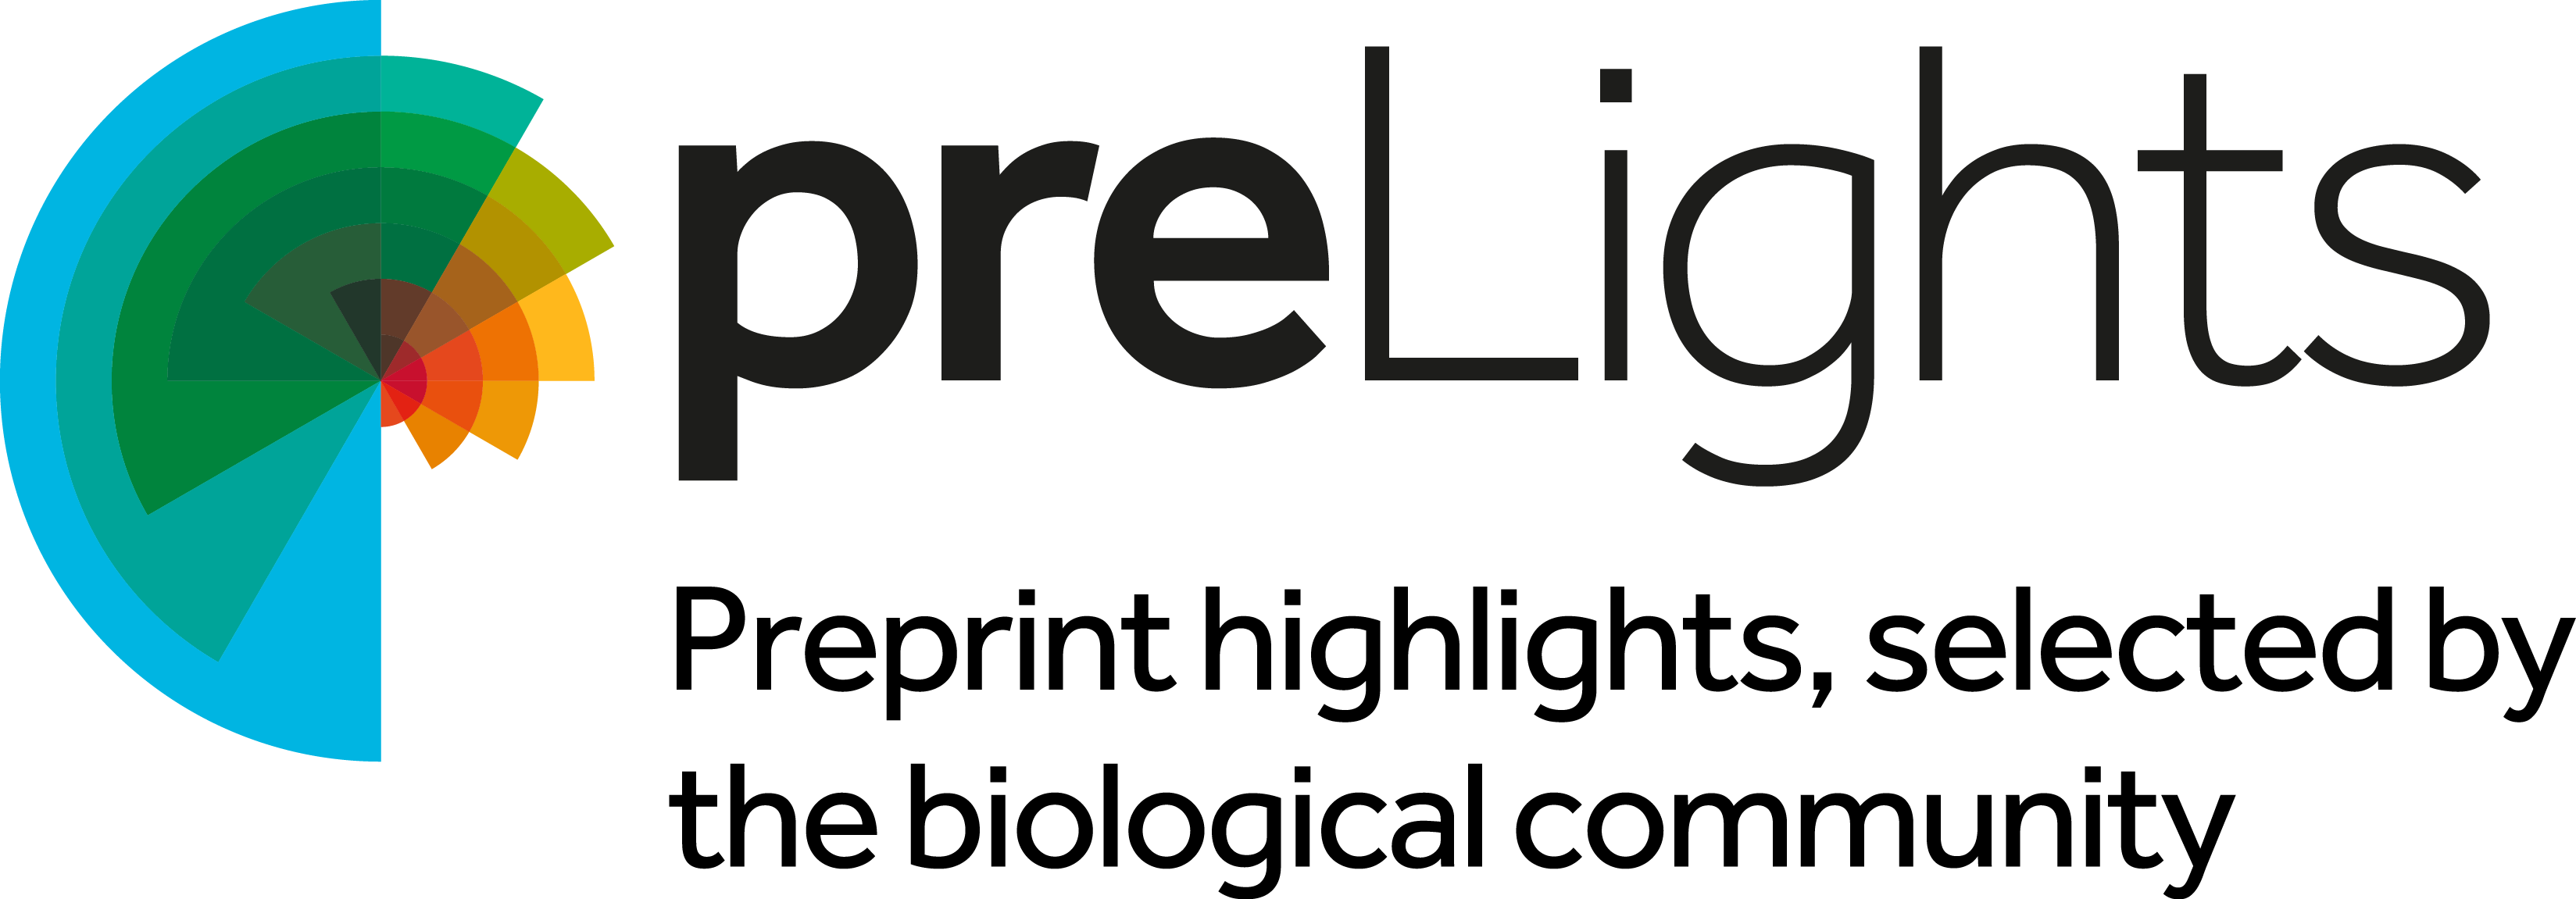 2021-07/prelights_logo_rgb.png